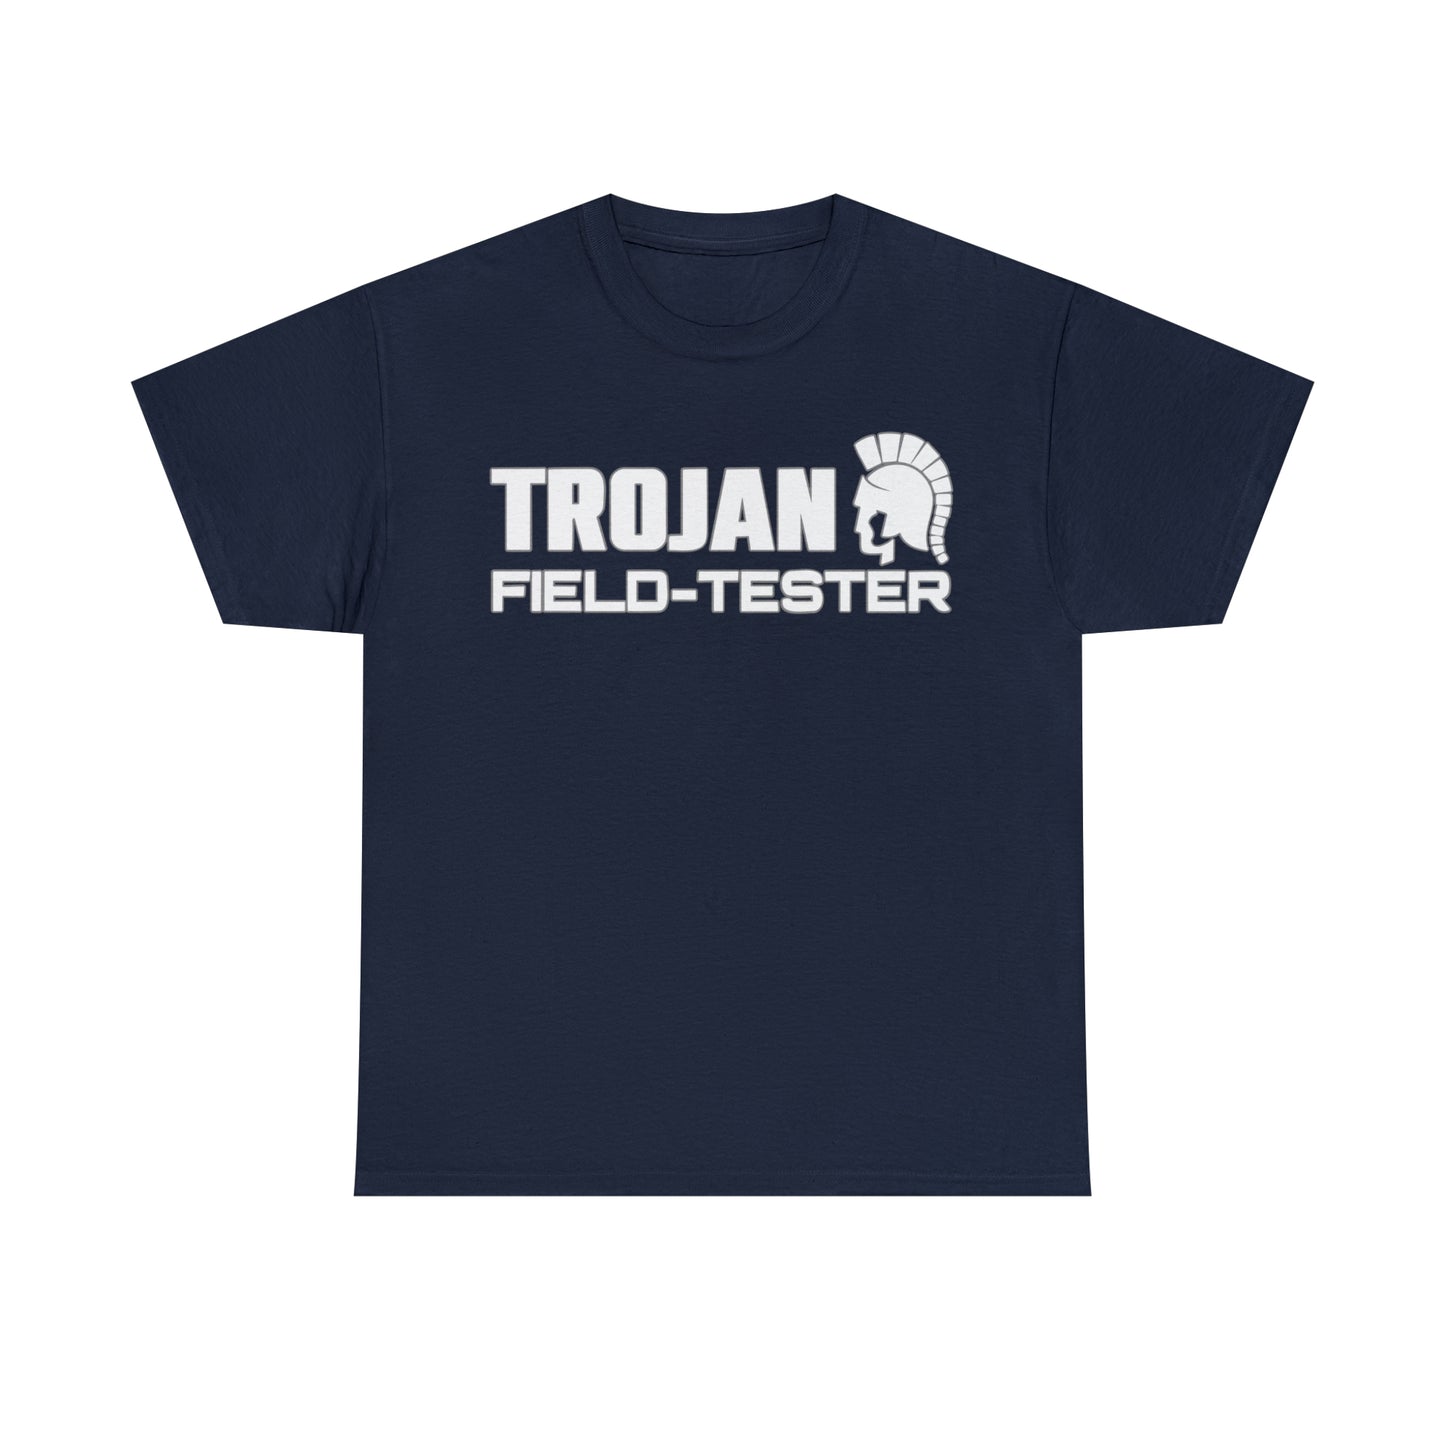 "Trojan Field Tester" Tee